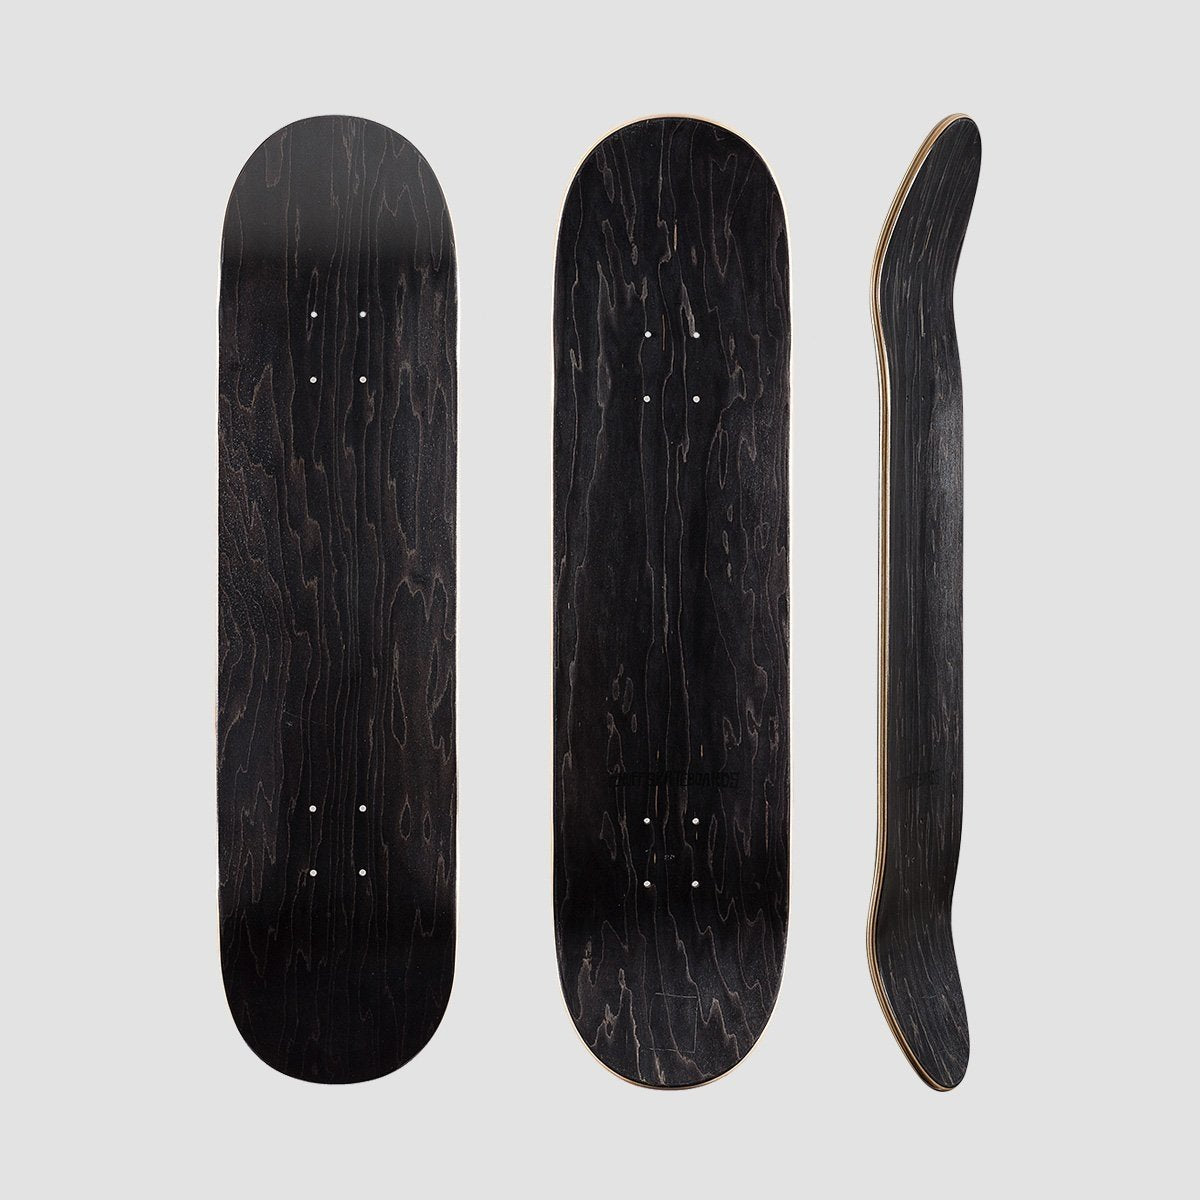 Enuff Classic Skateboard Deck Black - 7.5"